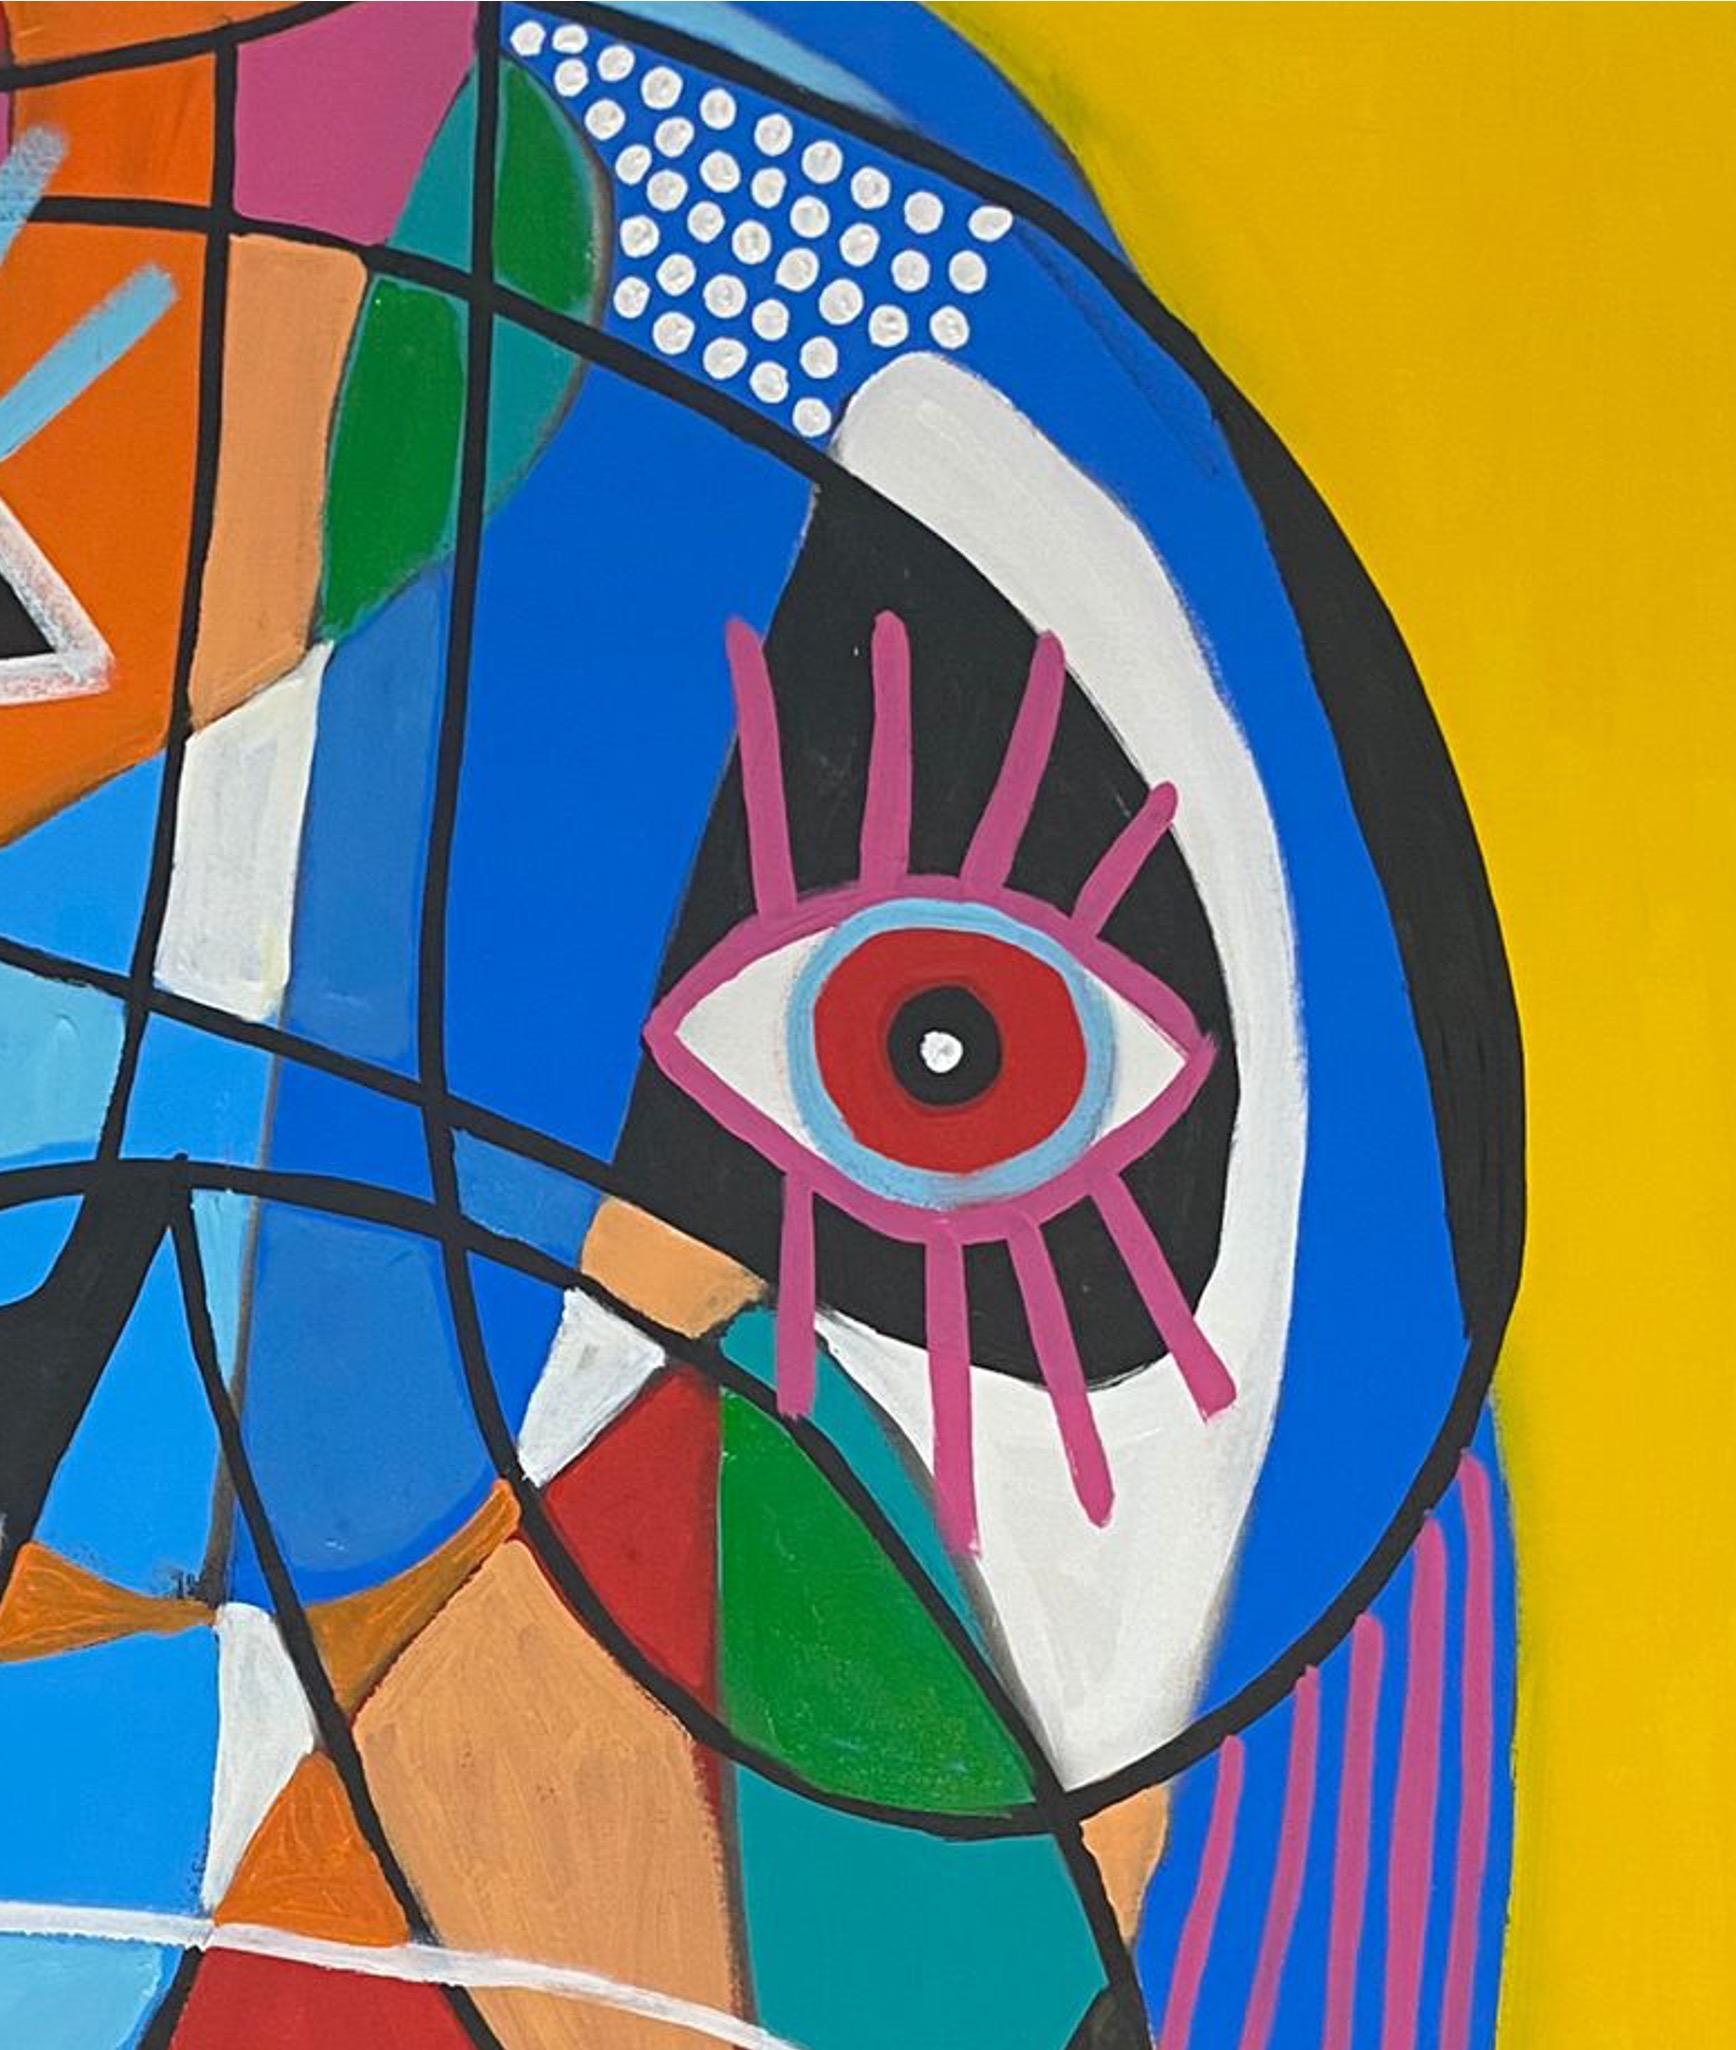 Contemporary Art, Abstract Painting
Acrylic on canvas
150x150cm
Signed


About the artist
Enrique Pichardo (Mexico City, 1973) graduated from Escuela Nacional de Pintura, Escultura y Grabado (ENPEG) “La Esmeralda”. As a Mexican Contemporary